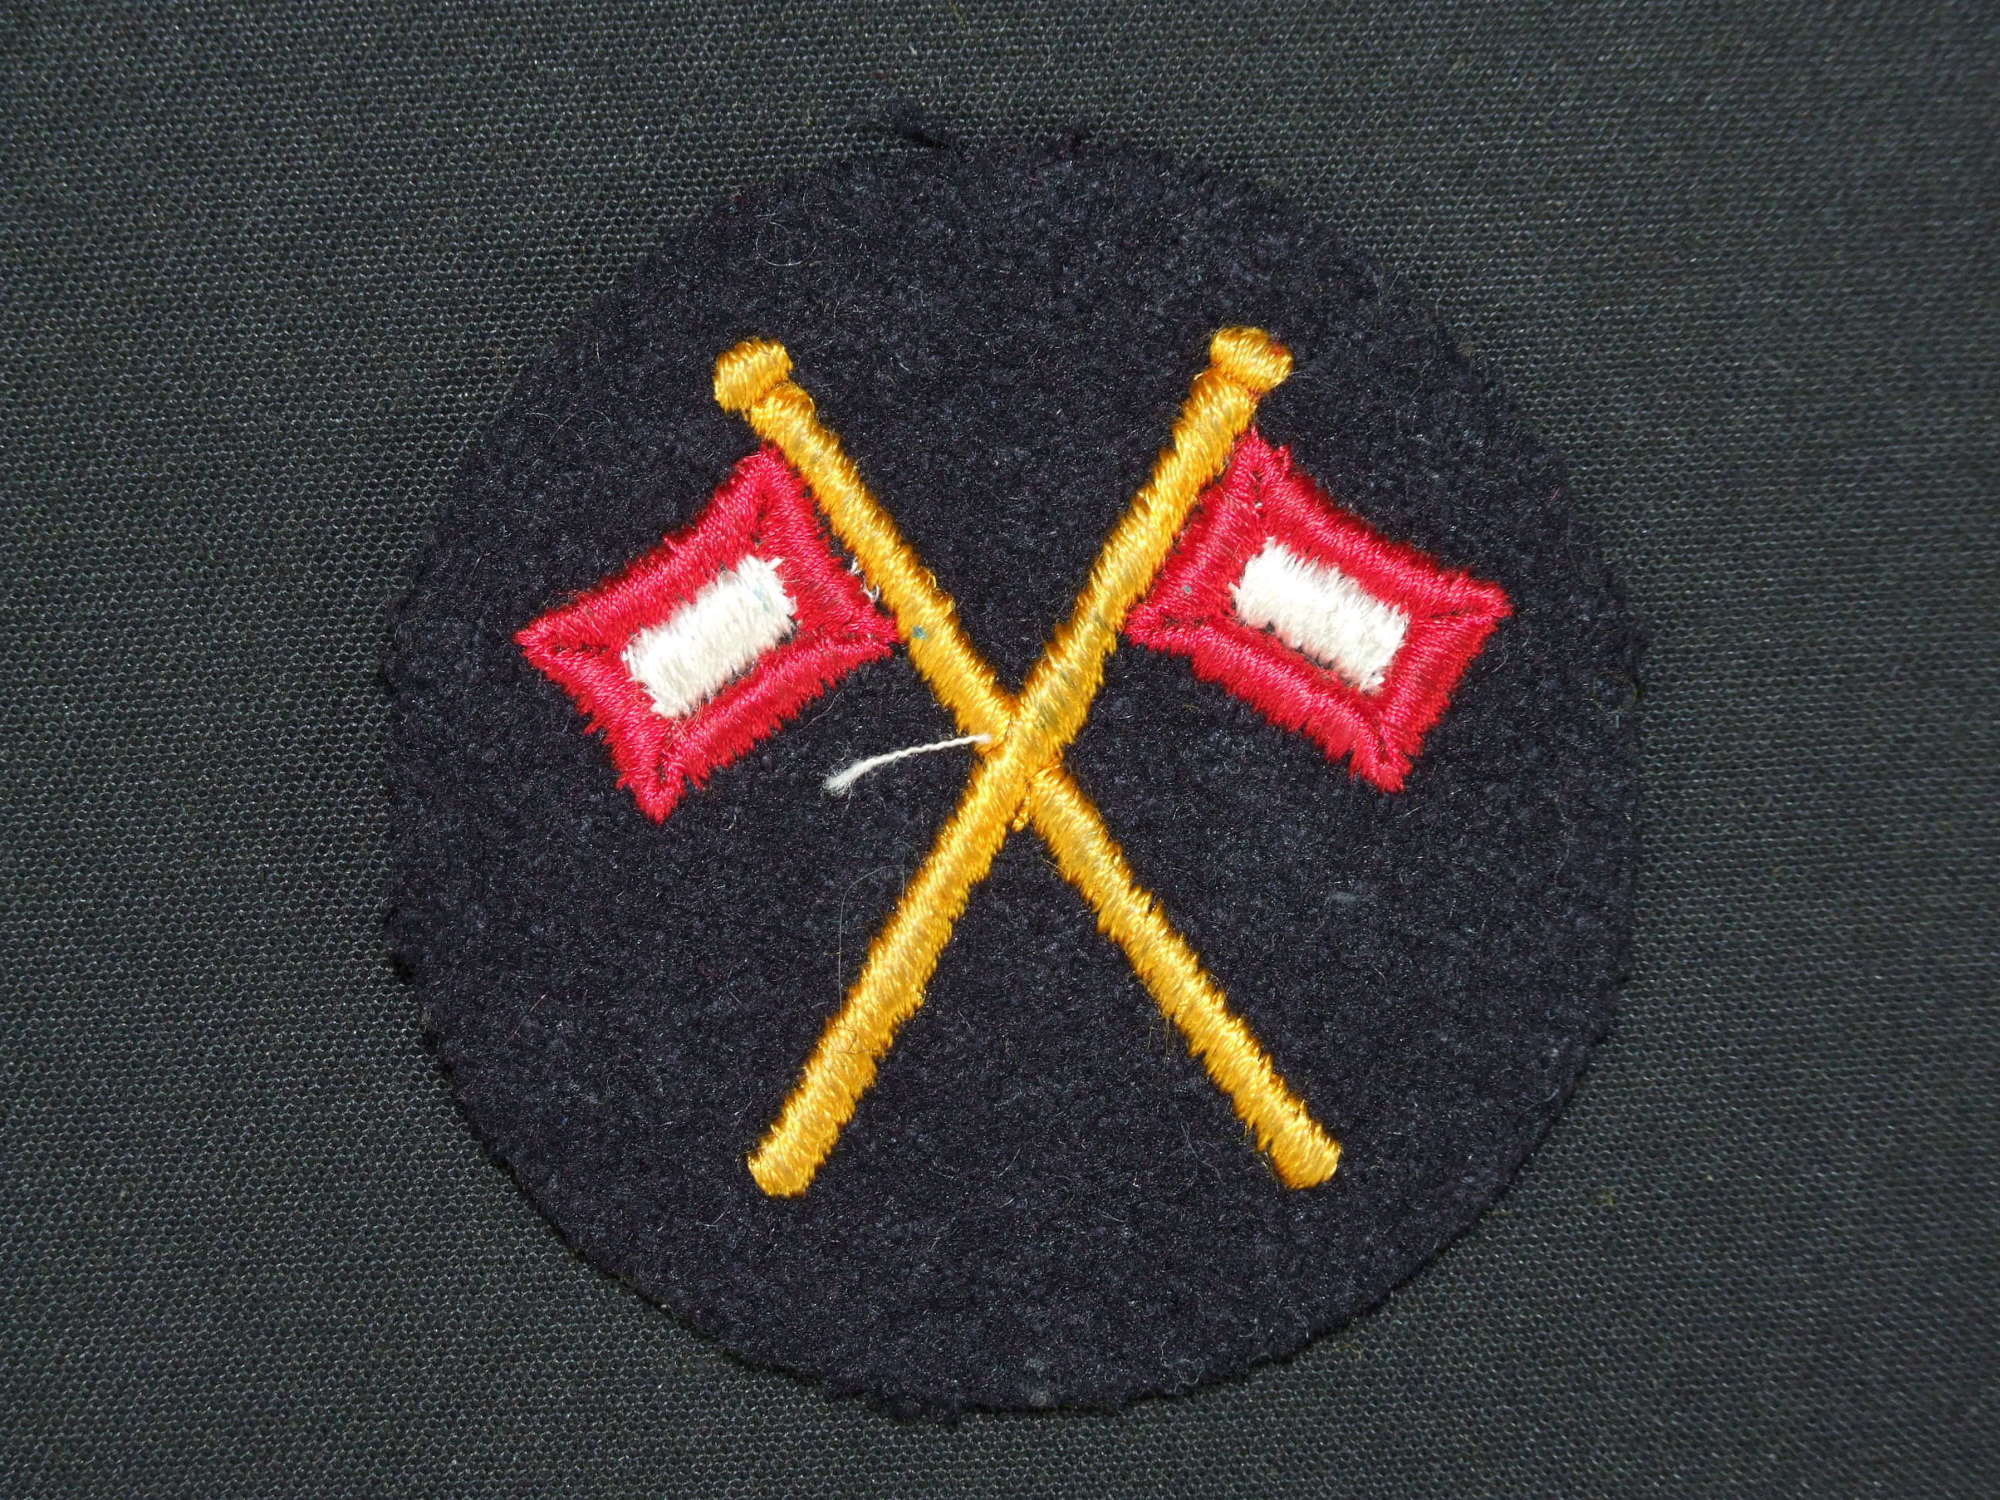 Kriegsmarine Signaller's Arm Badge